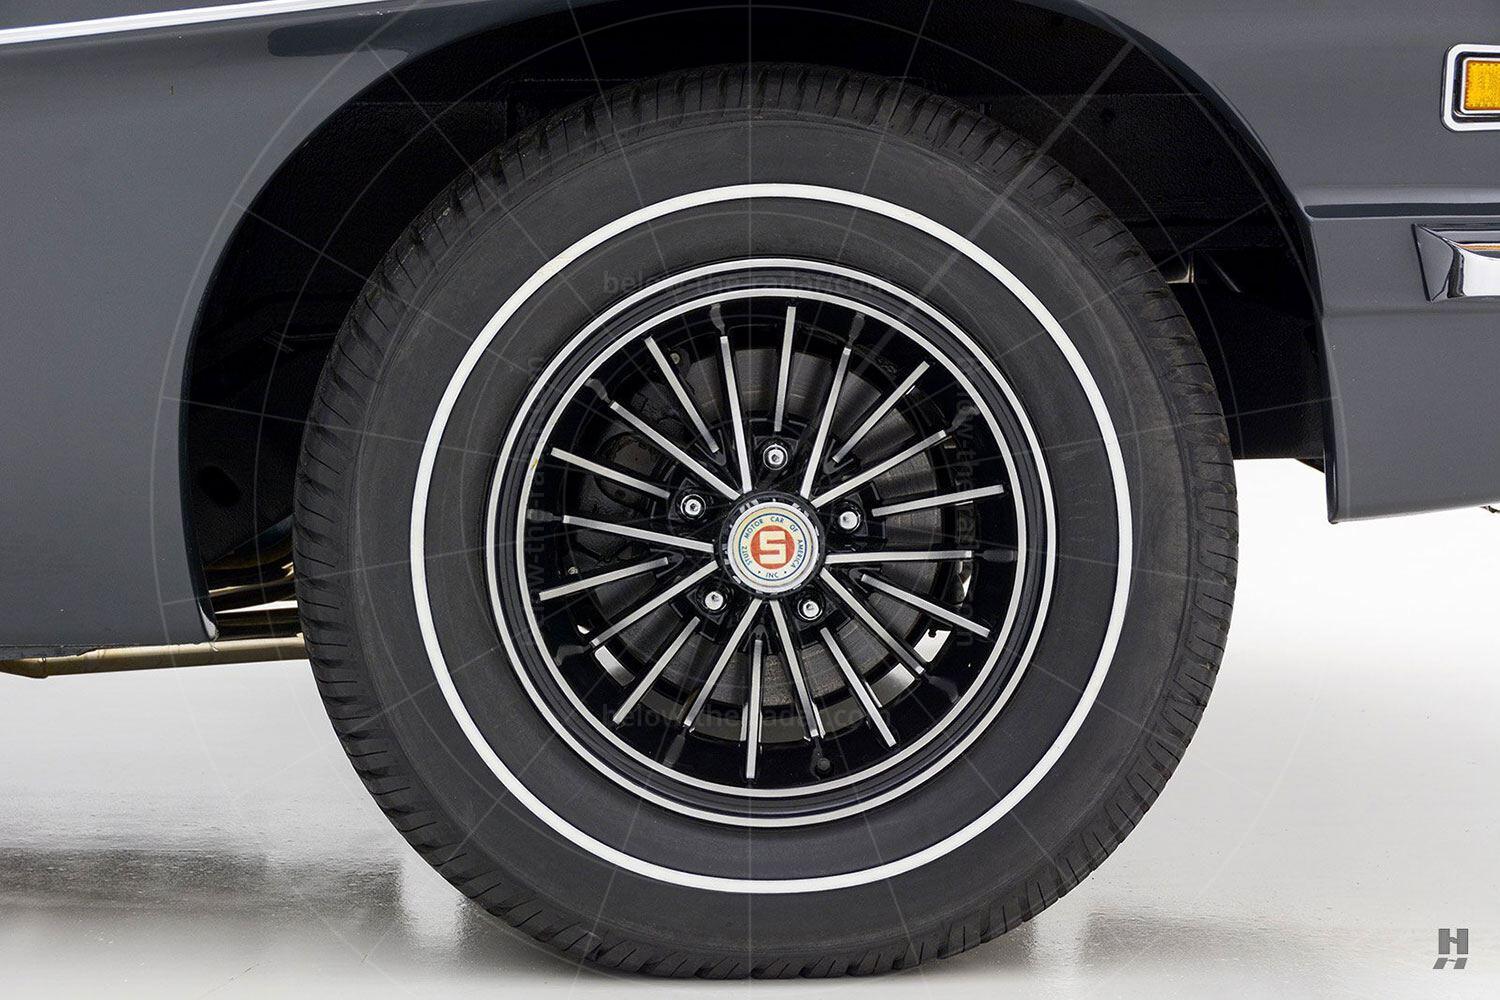 1971 Stutz Blackhawk coupé alloy wheel Pic: Hyman Ltd | 1971 Stutz Blackhawk coupé alloy wheel